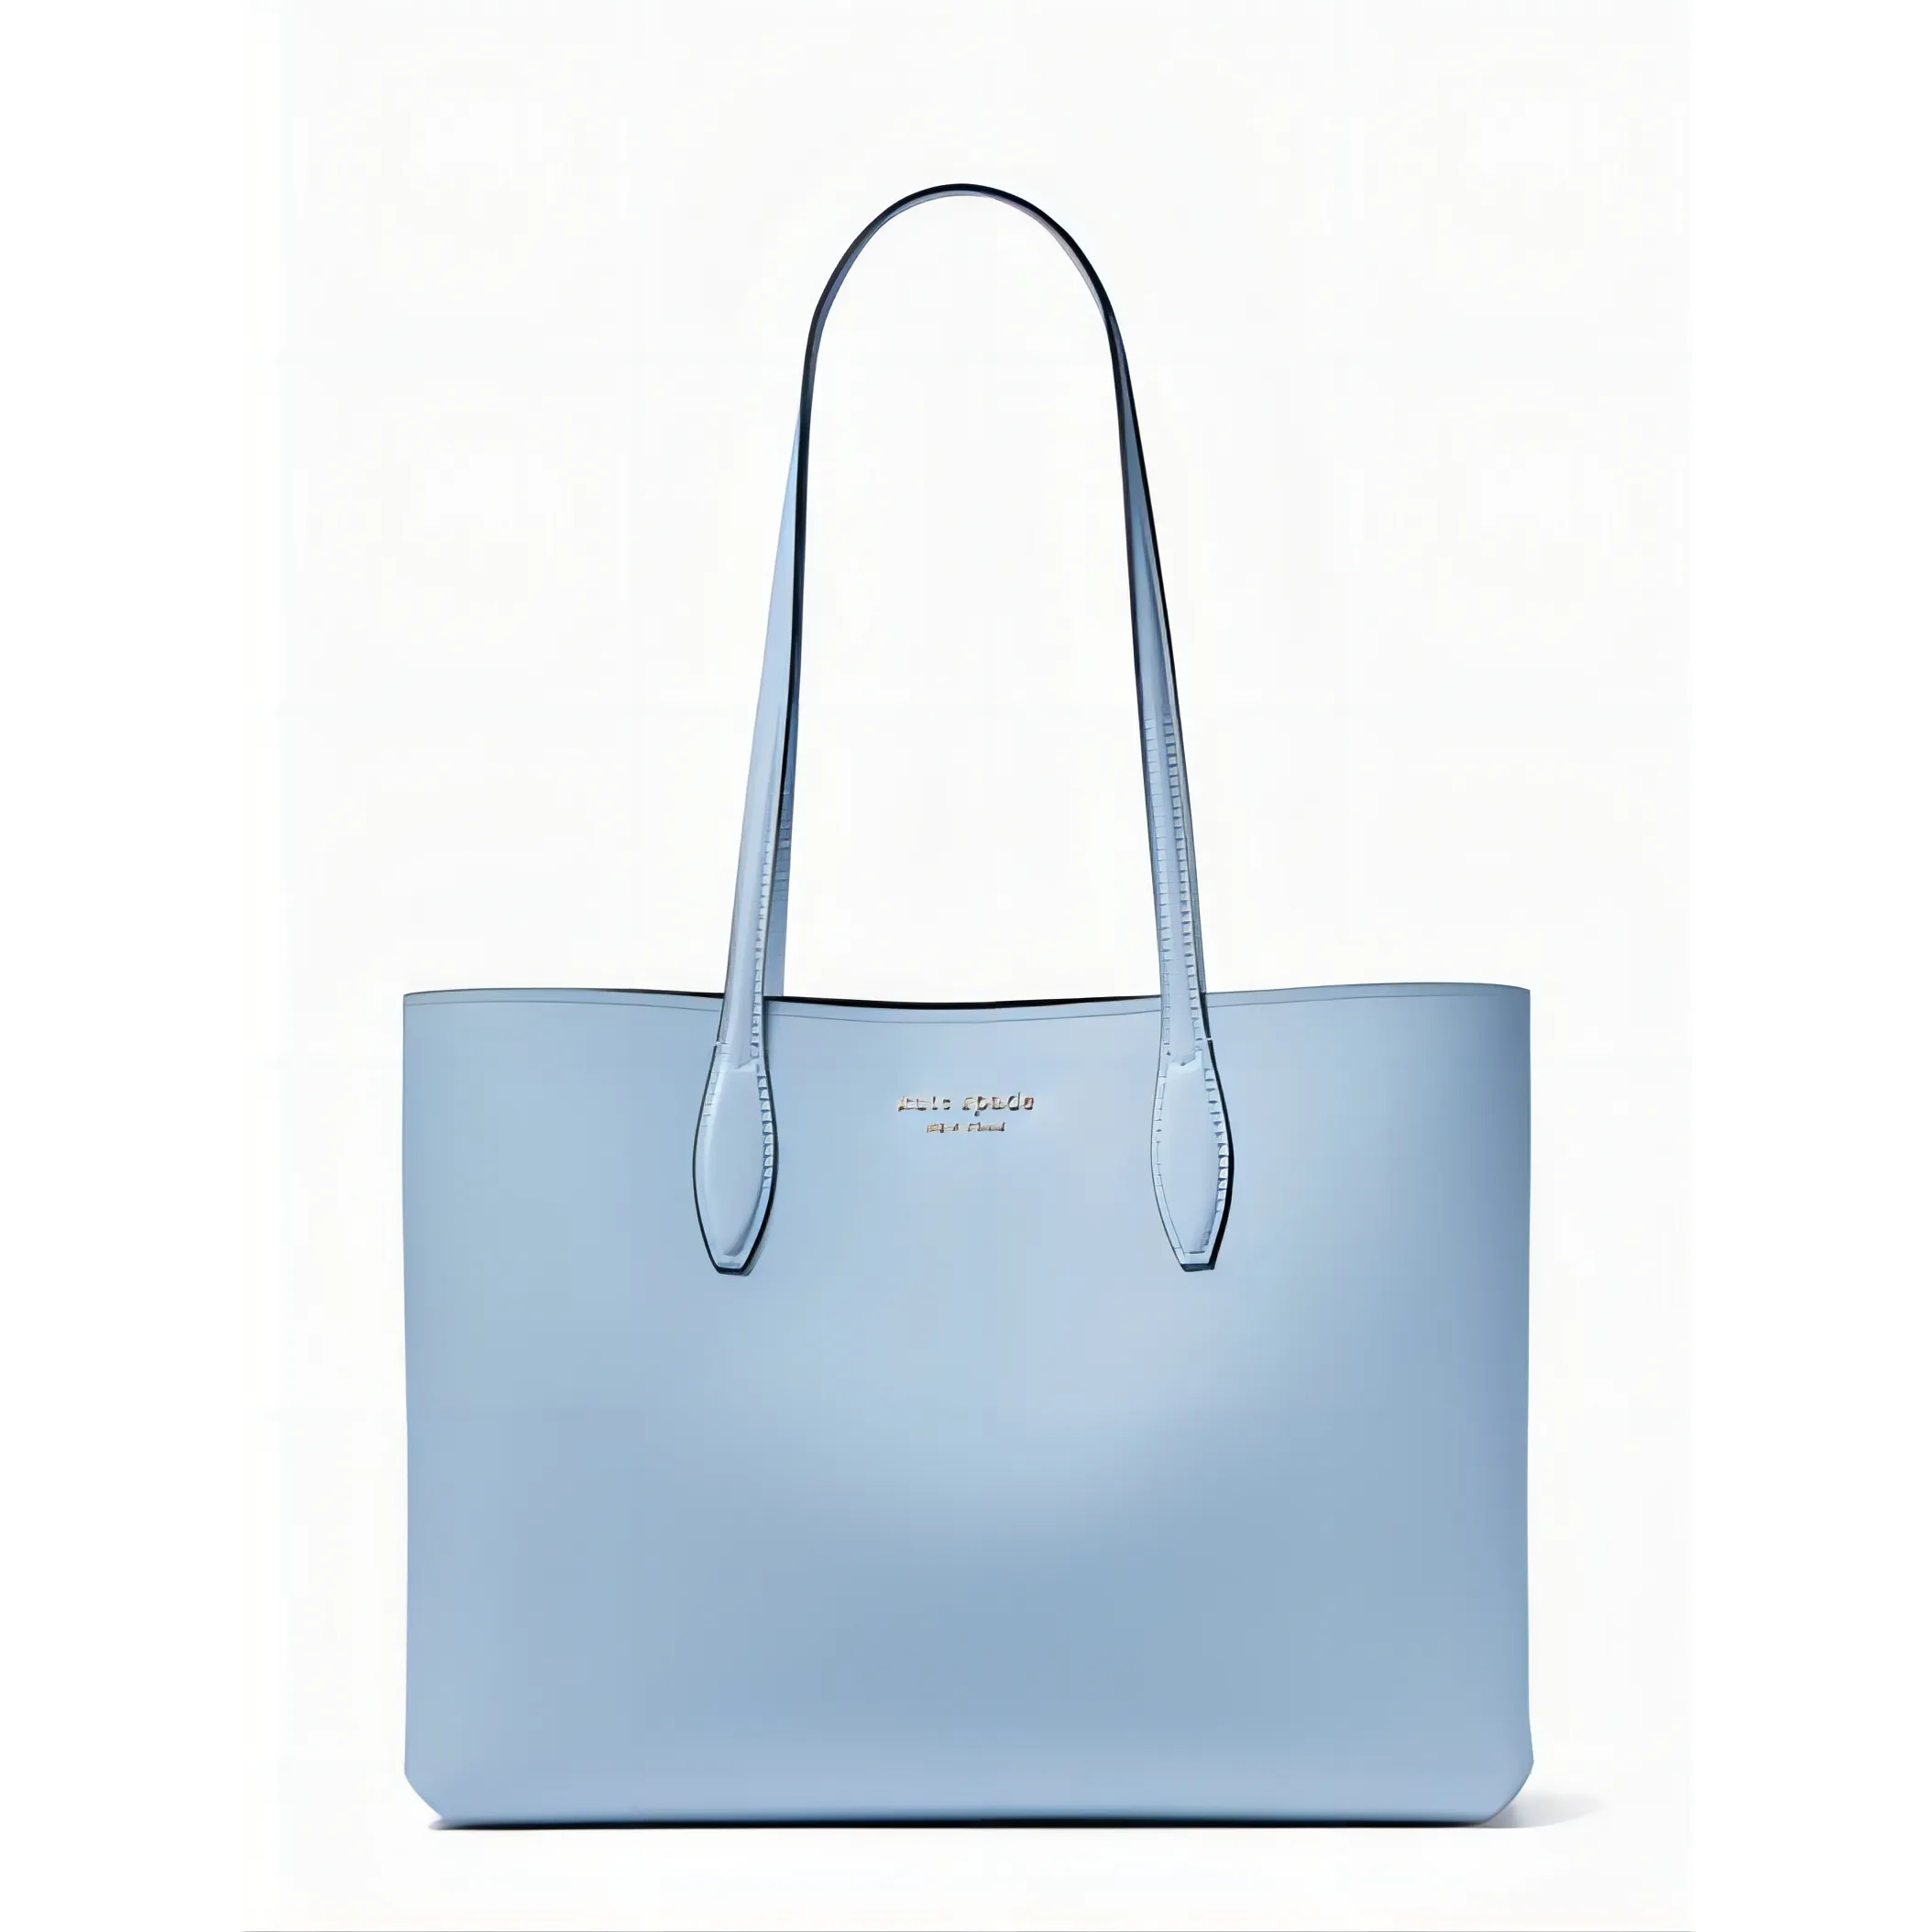 New Customizable Young Fashion Lady Handbag Waterproof Large Capacity Leather Bag K.spade Same Bag